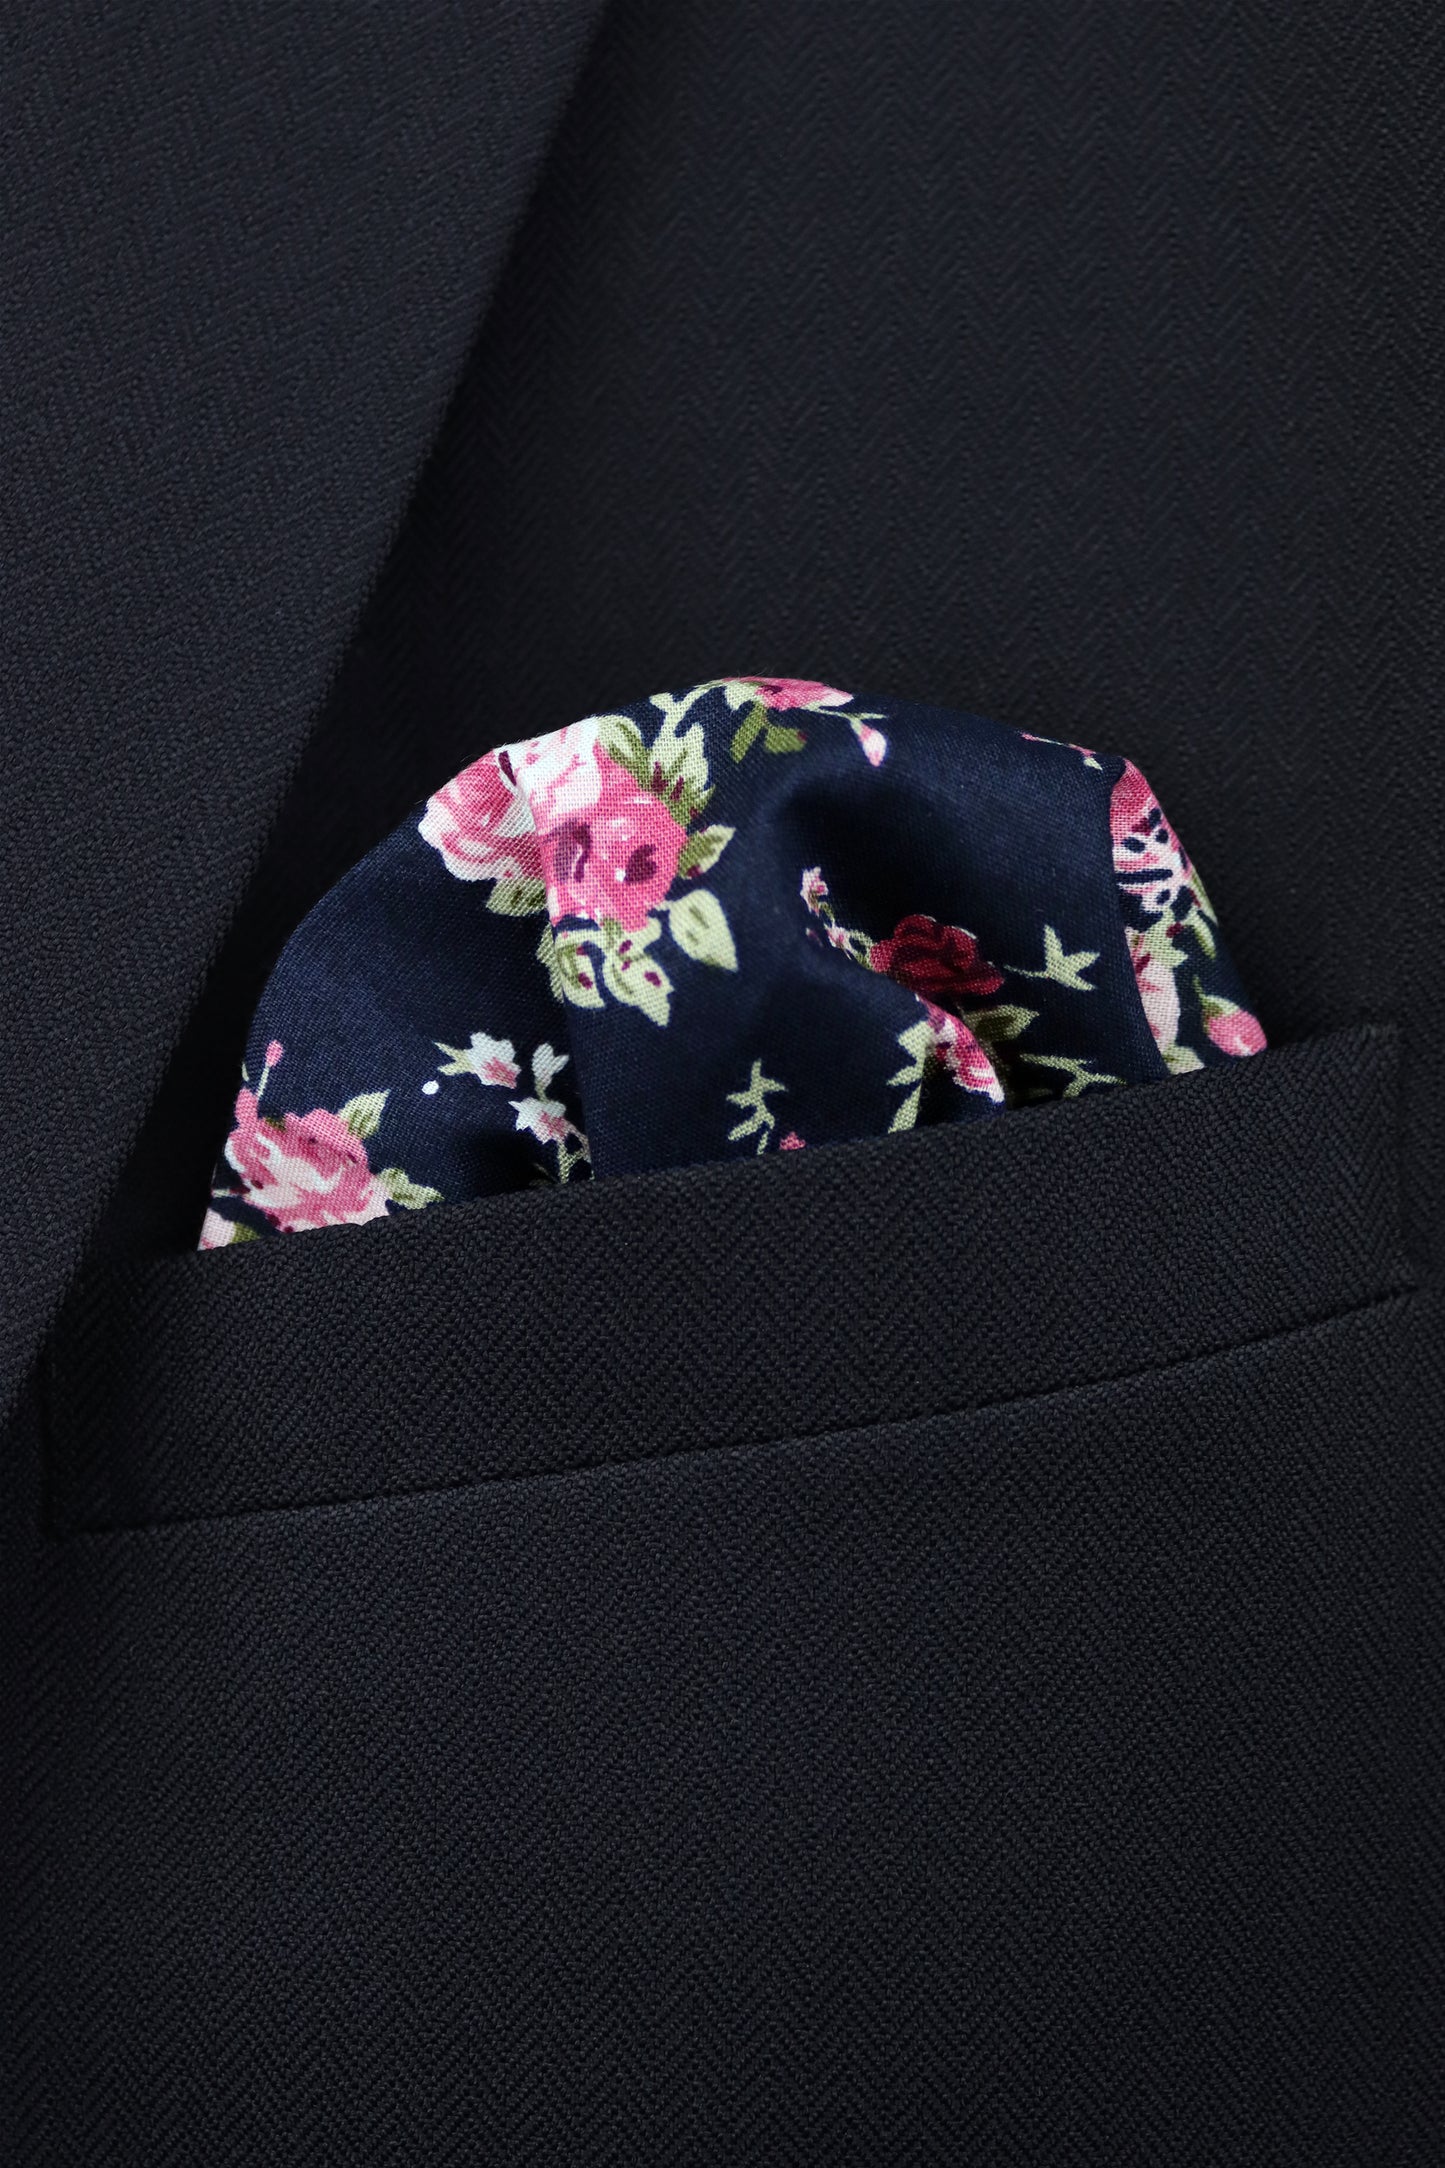 100% Cotton Floral Print Tie - Navy Blue & Pink